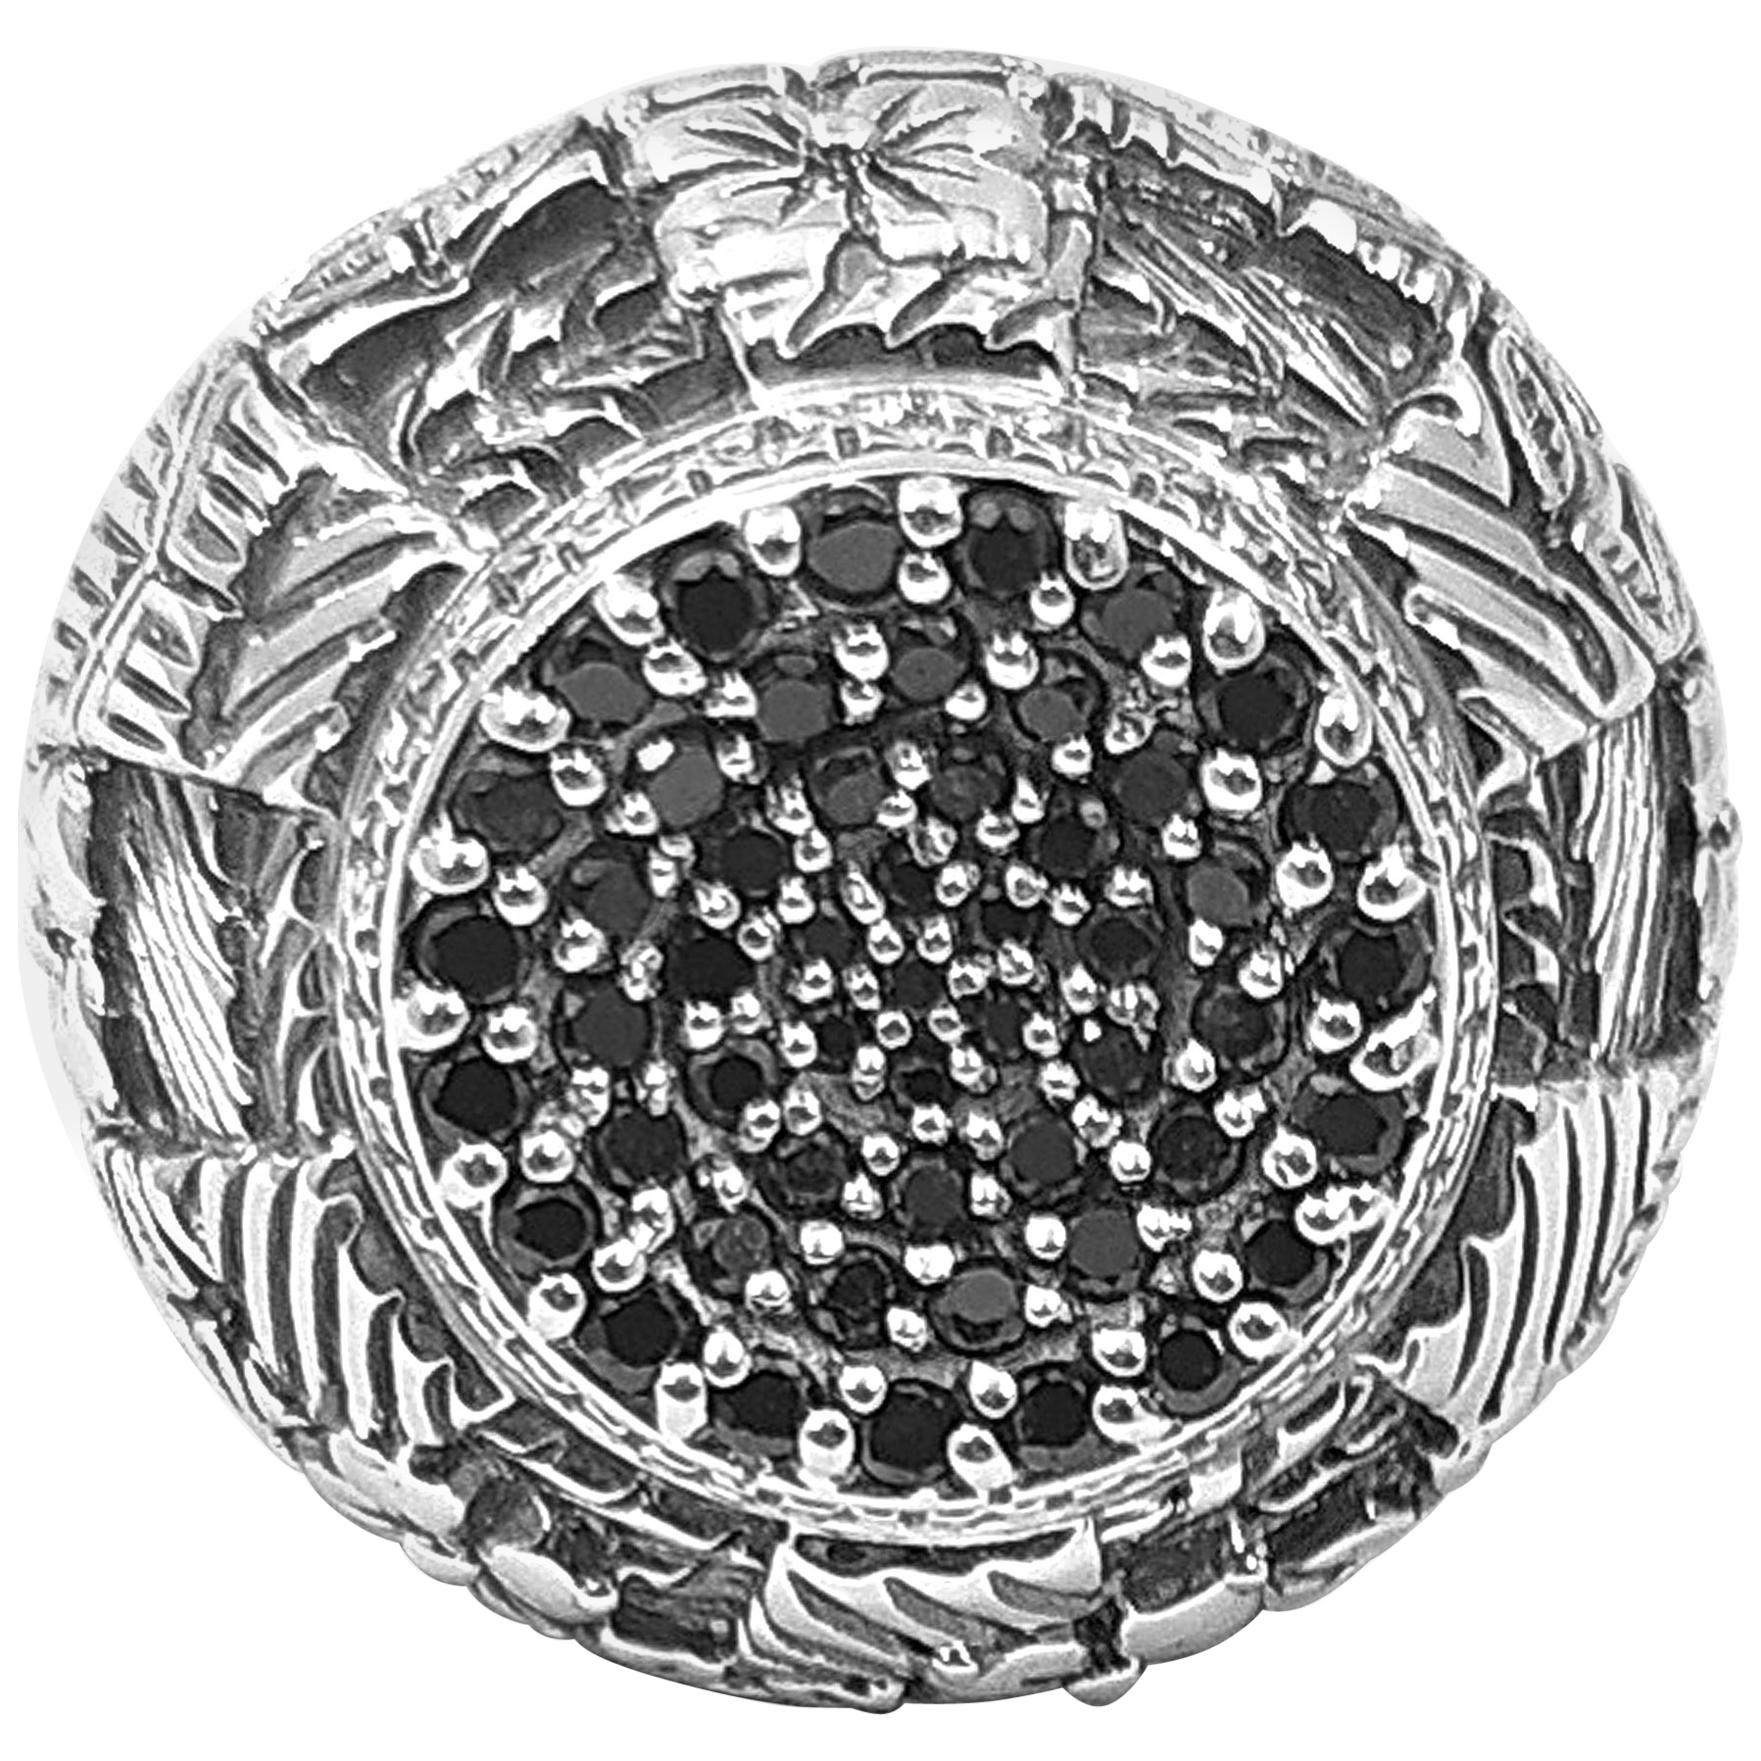 Kyoto Black Diamond Center & Engraved Sterling Silver Ring 